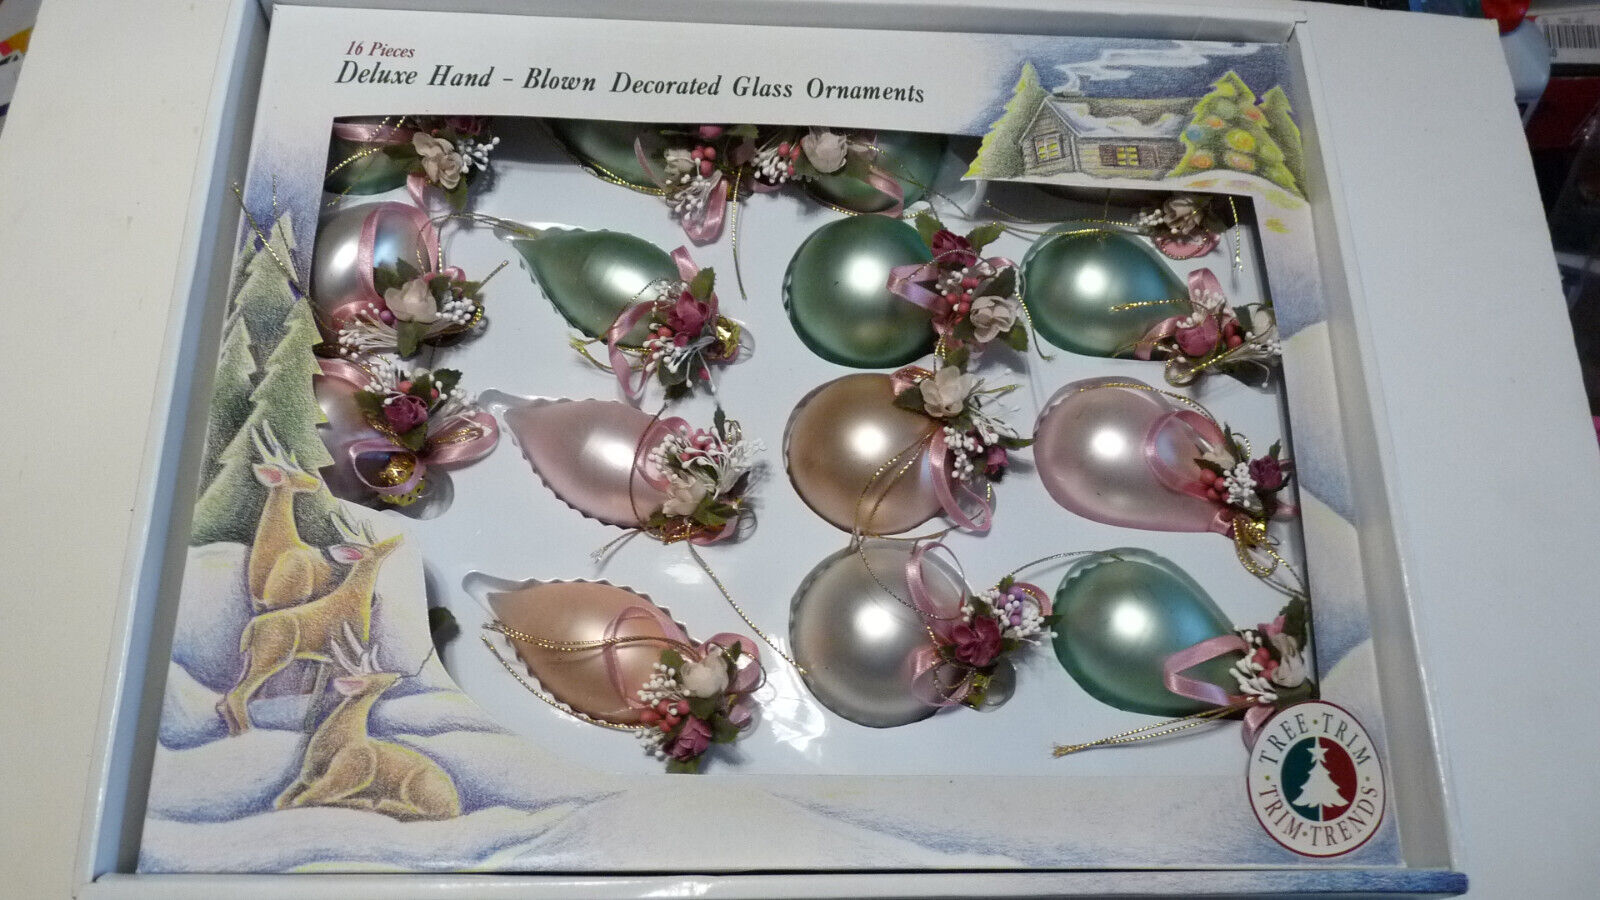 Vintage 16 Piece Deluxe Hand Blown Decorated Glass Ornaments 1991 Eden Prairie